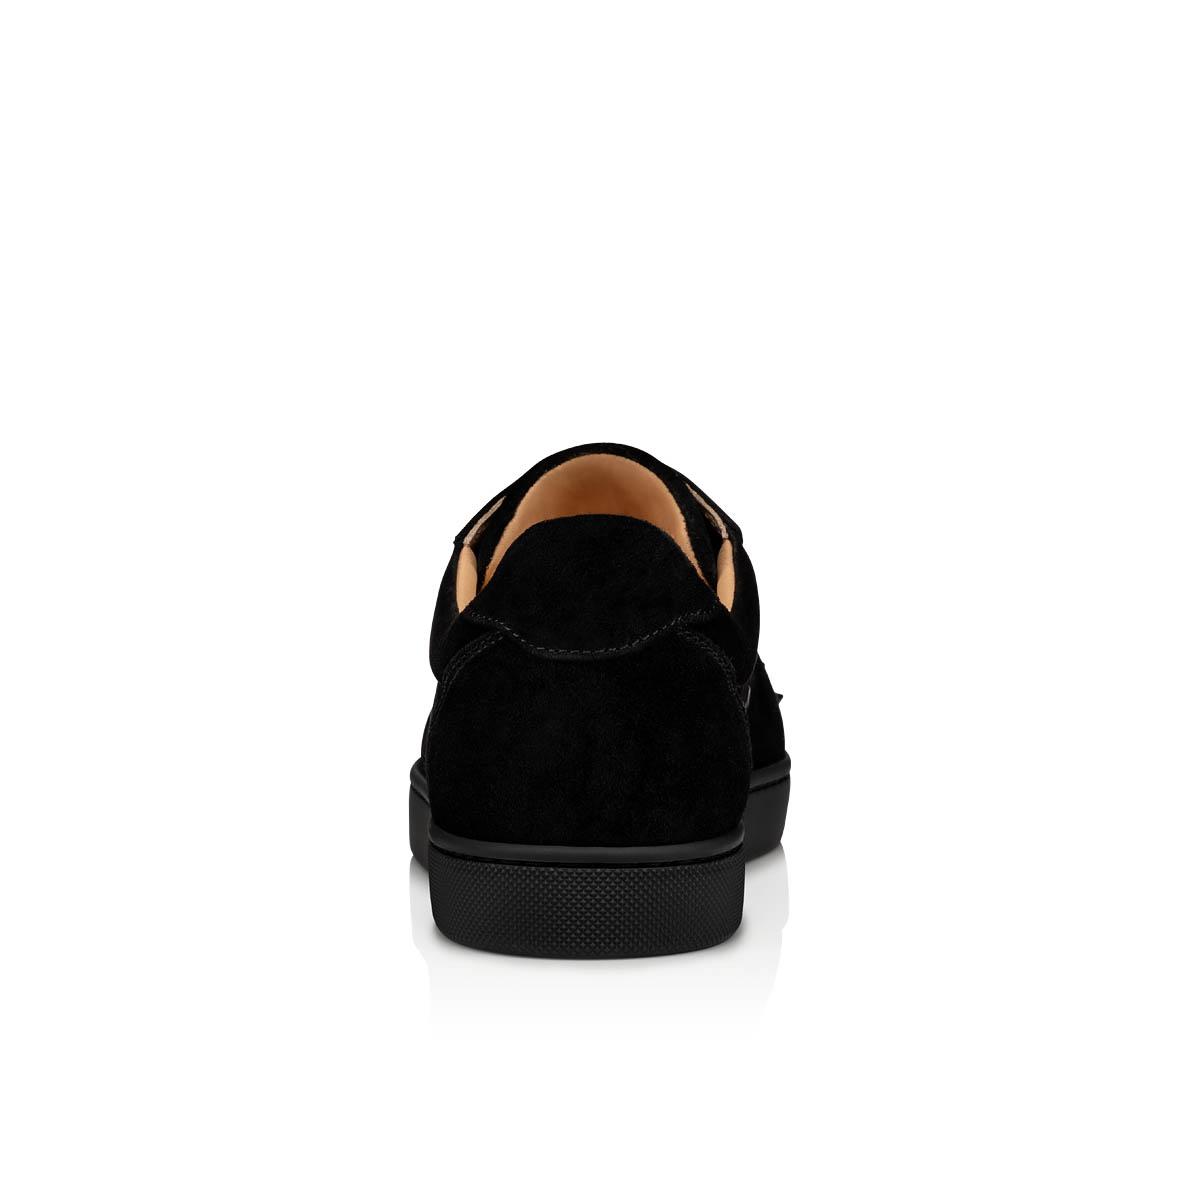 VIEIRA SPIKES 000 BLACK/BLACK/BK Veau velours - Shoes - Women 